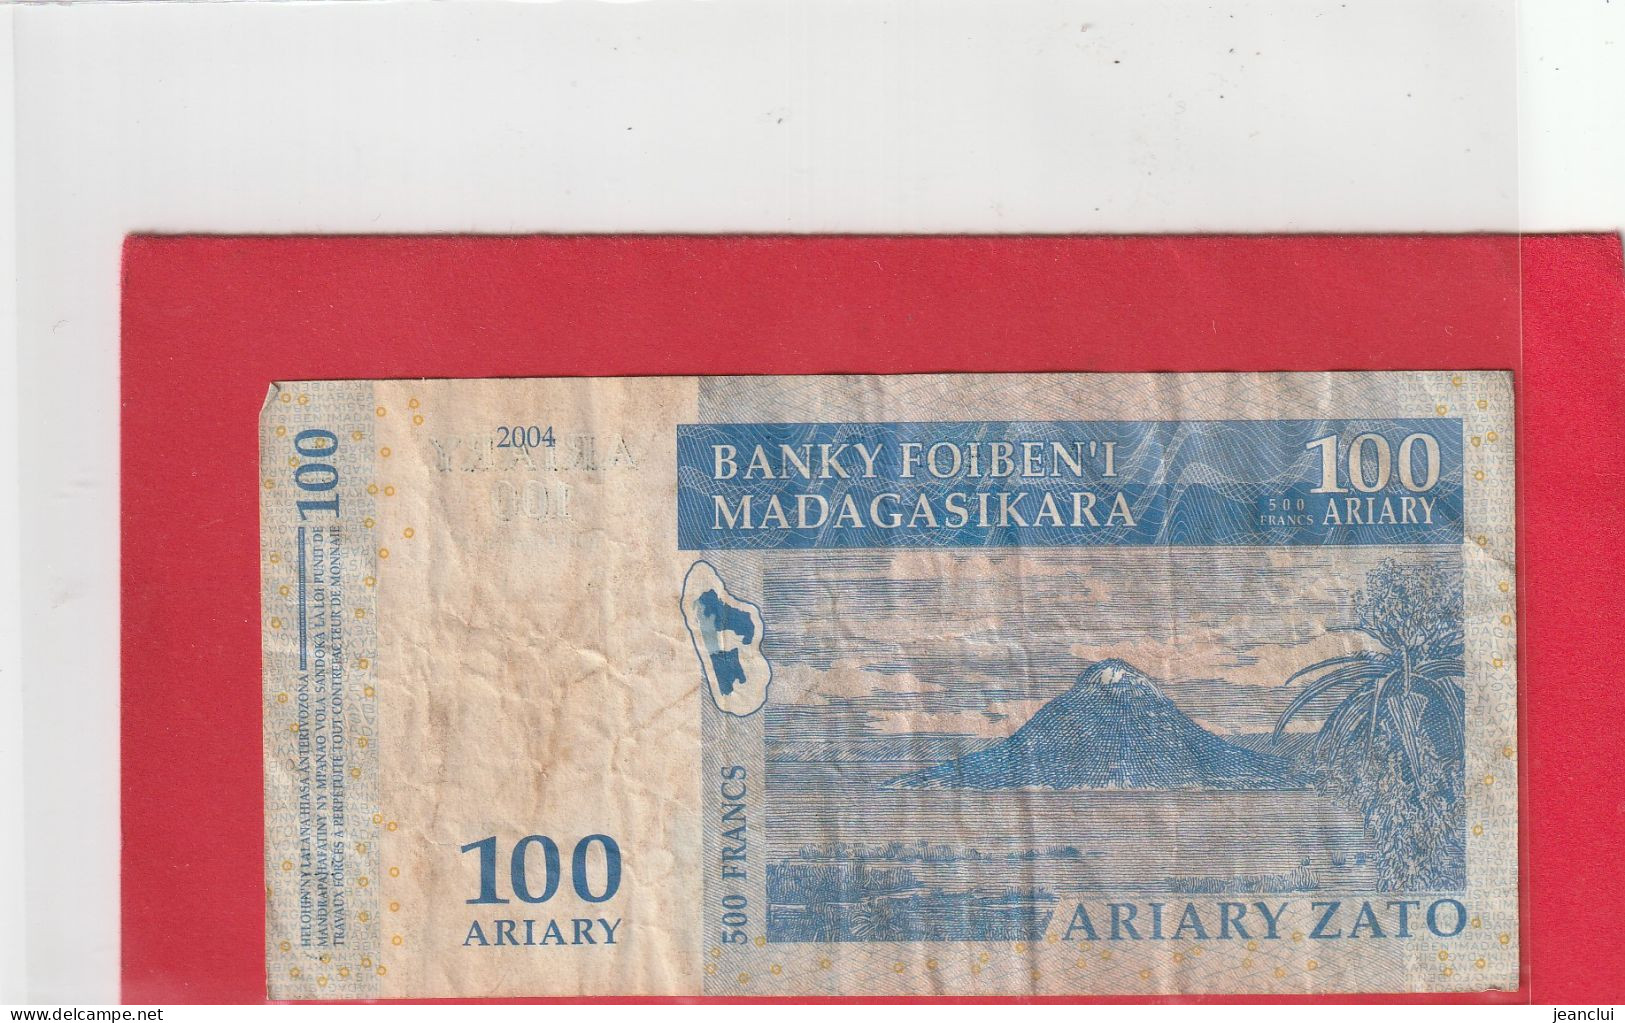 BANKY FOIBEN'I MADAGASIKARA  .  100 ARIARY  -  500 FRANCS  .  2004  .  N° A 2503975 B   .  2 SCANES - Madagascar